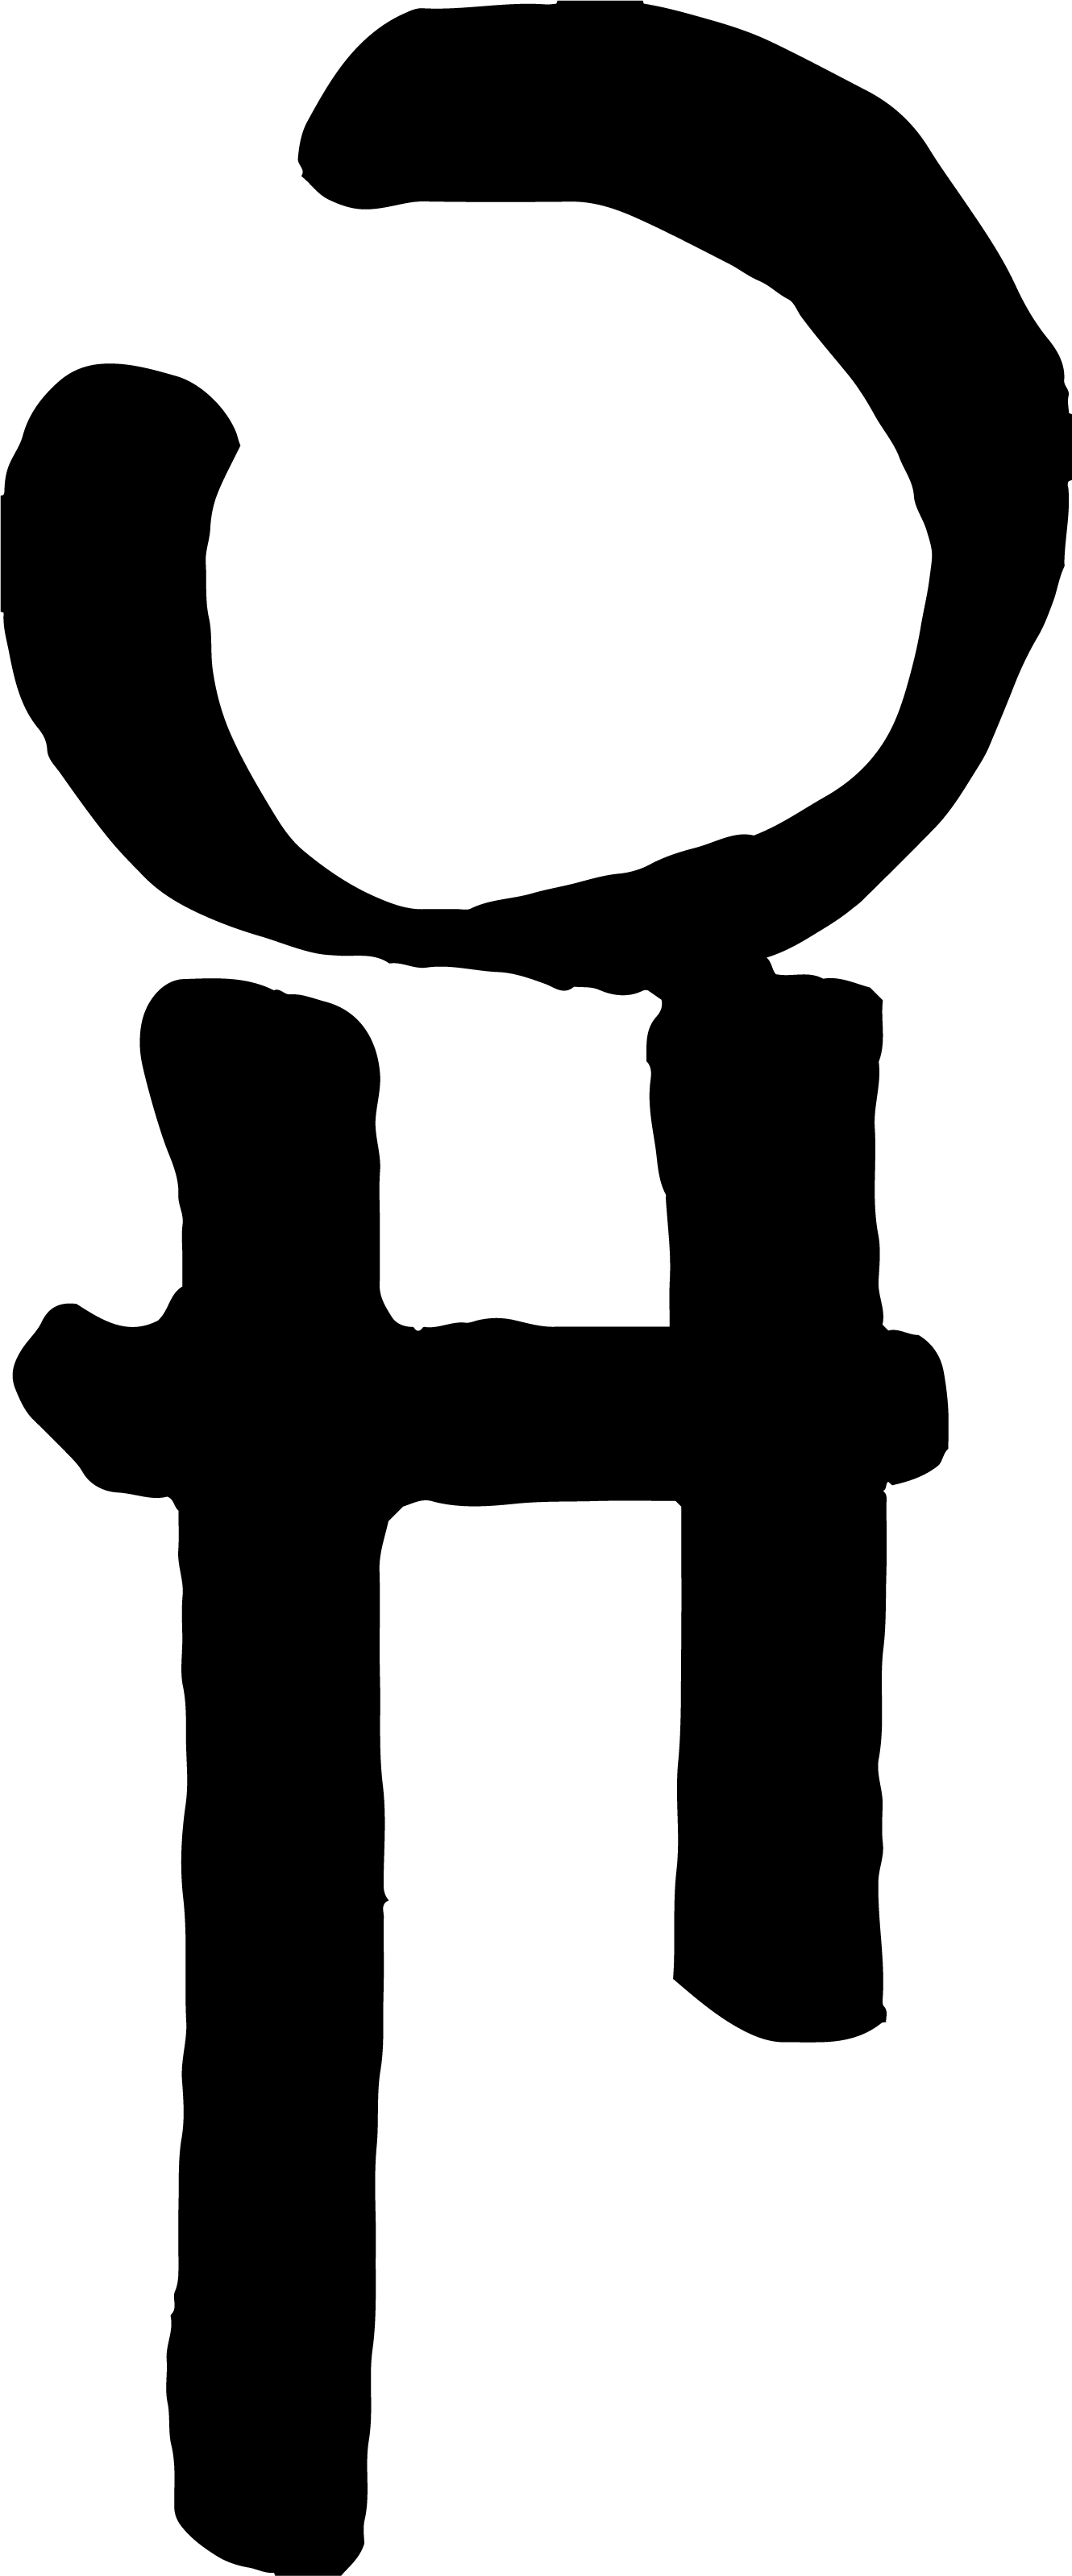 Makoto Taiko Logo, calligraphic circle over a capital H resembling an odaiko